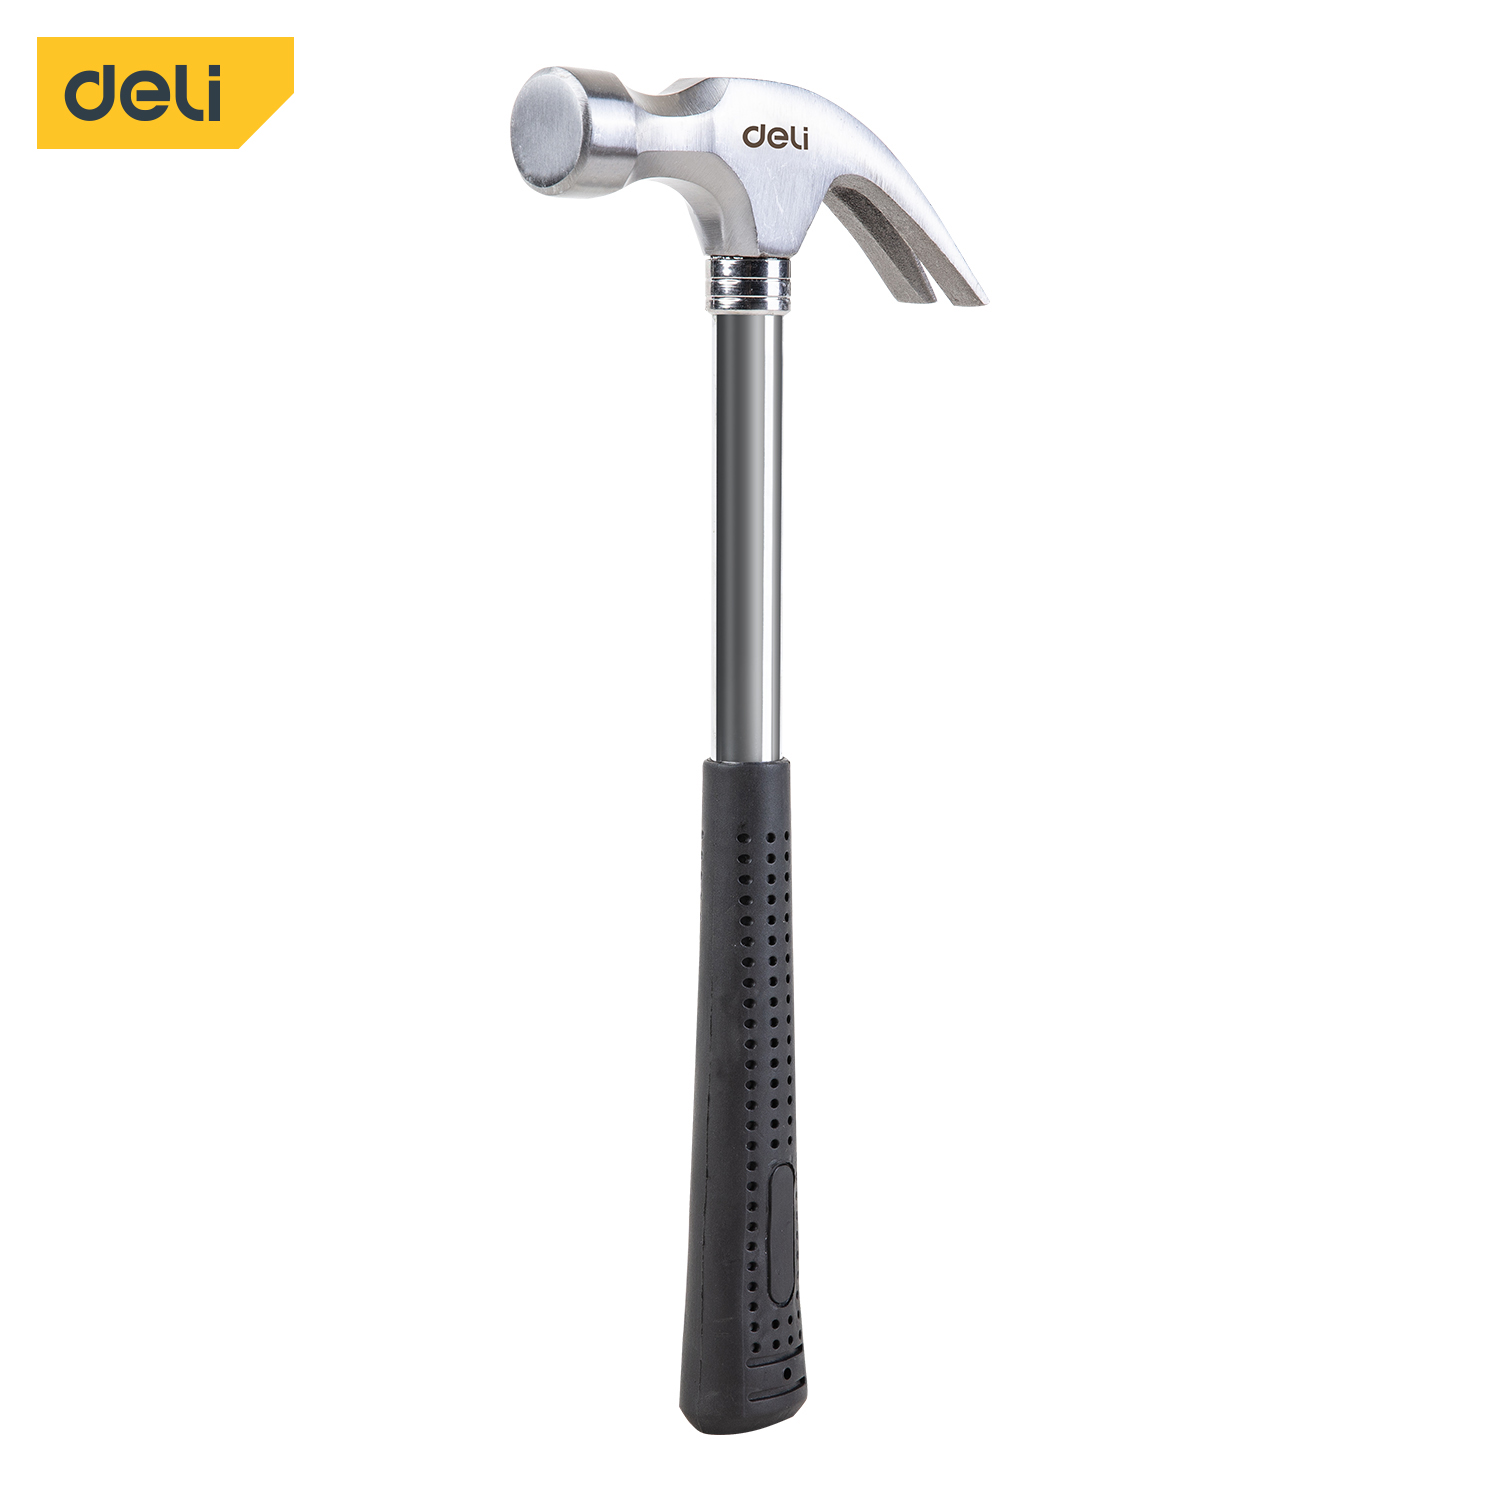 Deli-EDL5050 Claw Hammer